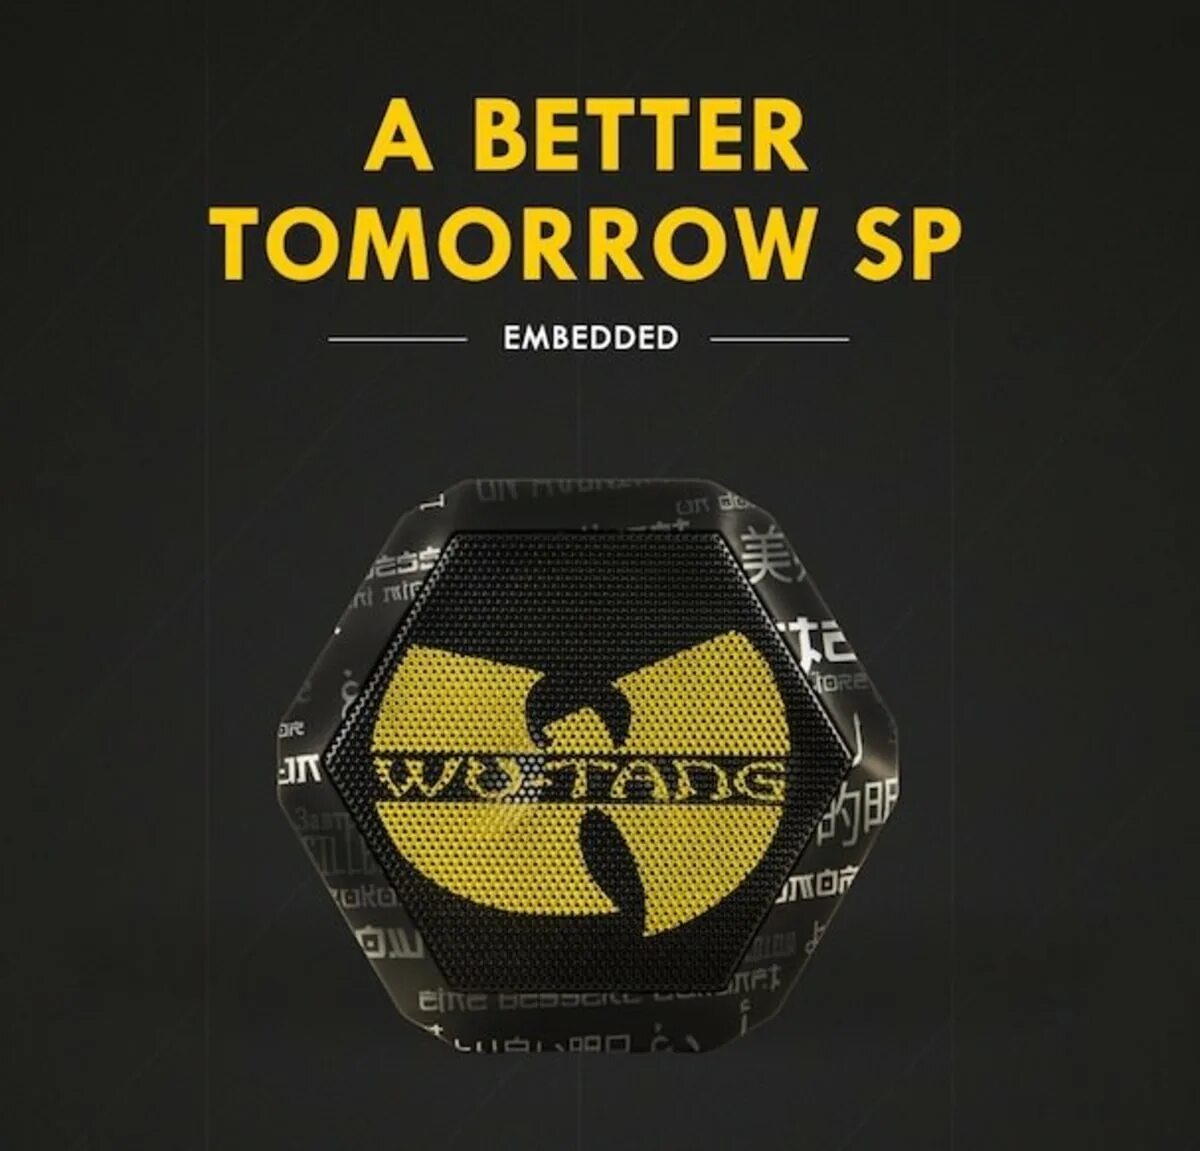 Clan better. A better tomorrow Wu-Tang Clan. Better tomorrow Wu Tang. Wu Tang альбом a better tomorrow. A better tomorrow Wu-Tang Clan обложка.